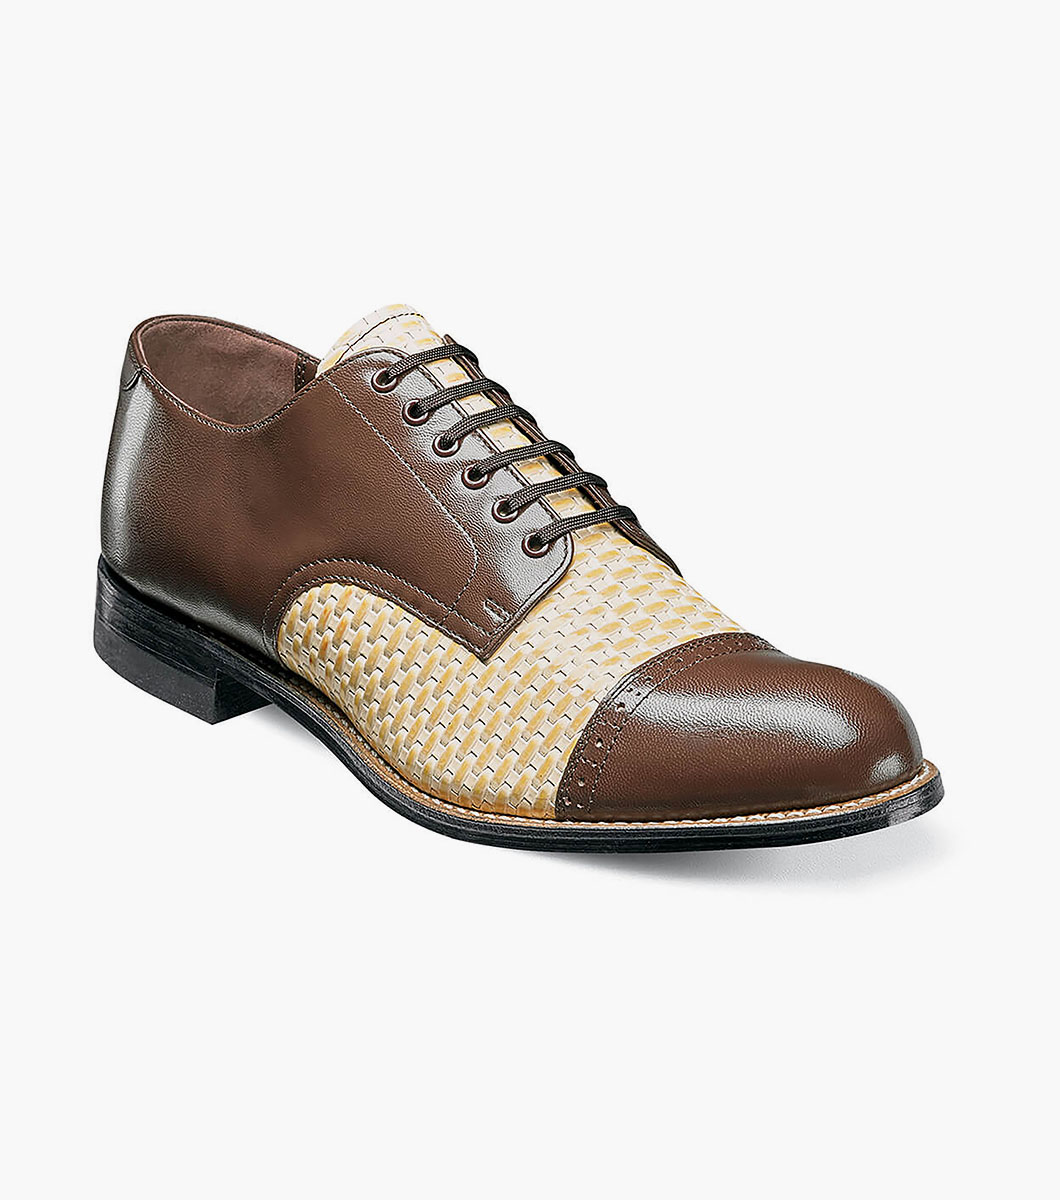 Men's Dress Shoes | Brown Multi Woven Cap Toe Oxford | Stacy Adams Madison